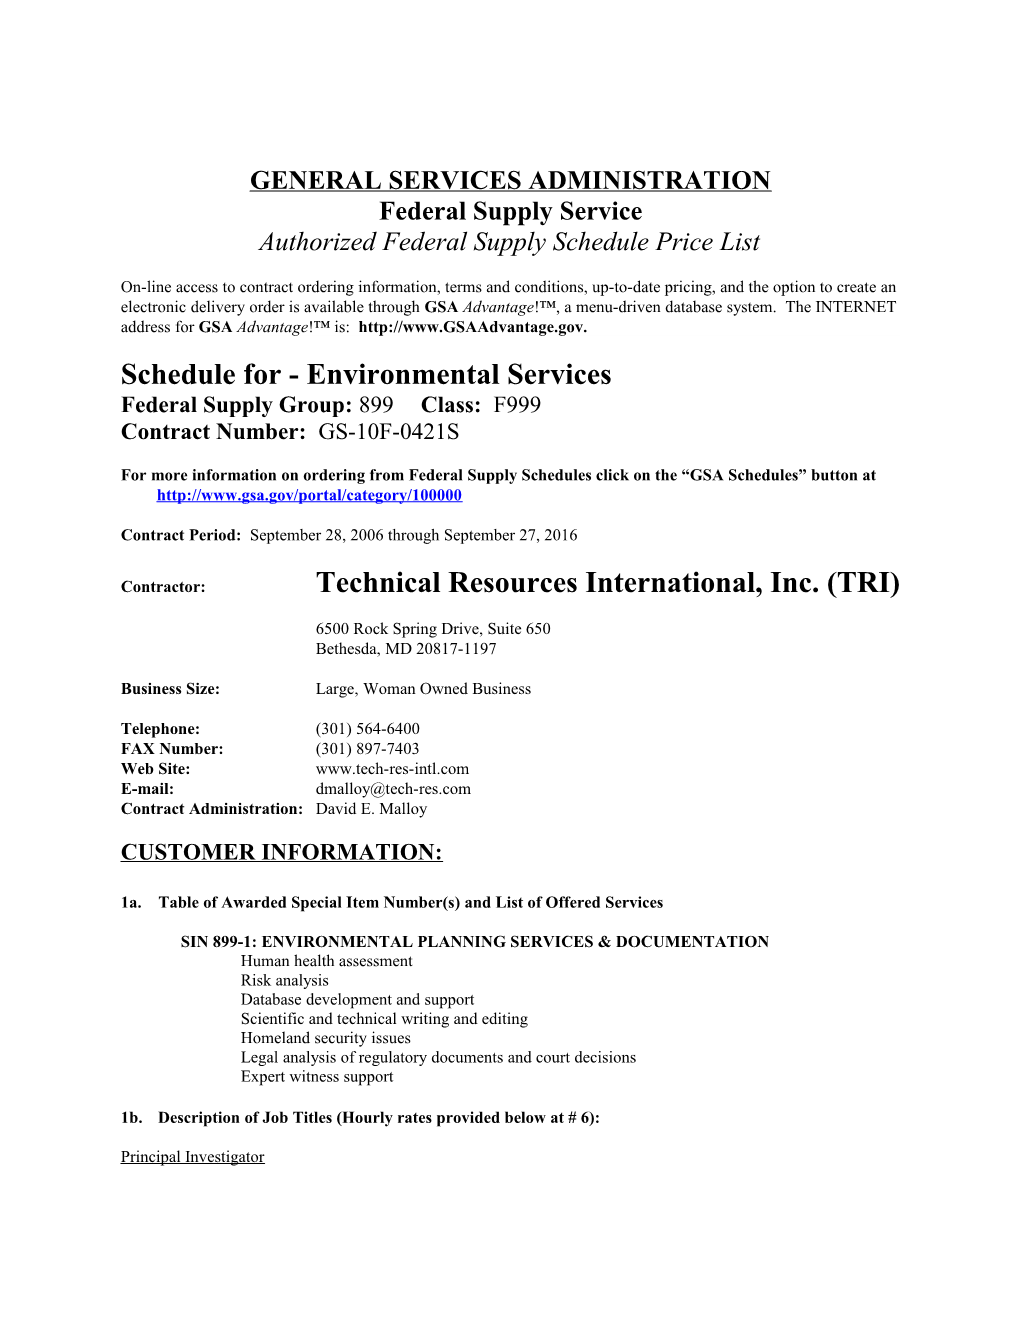 TRI GSA Env Services Price List